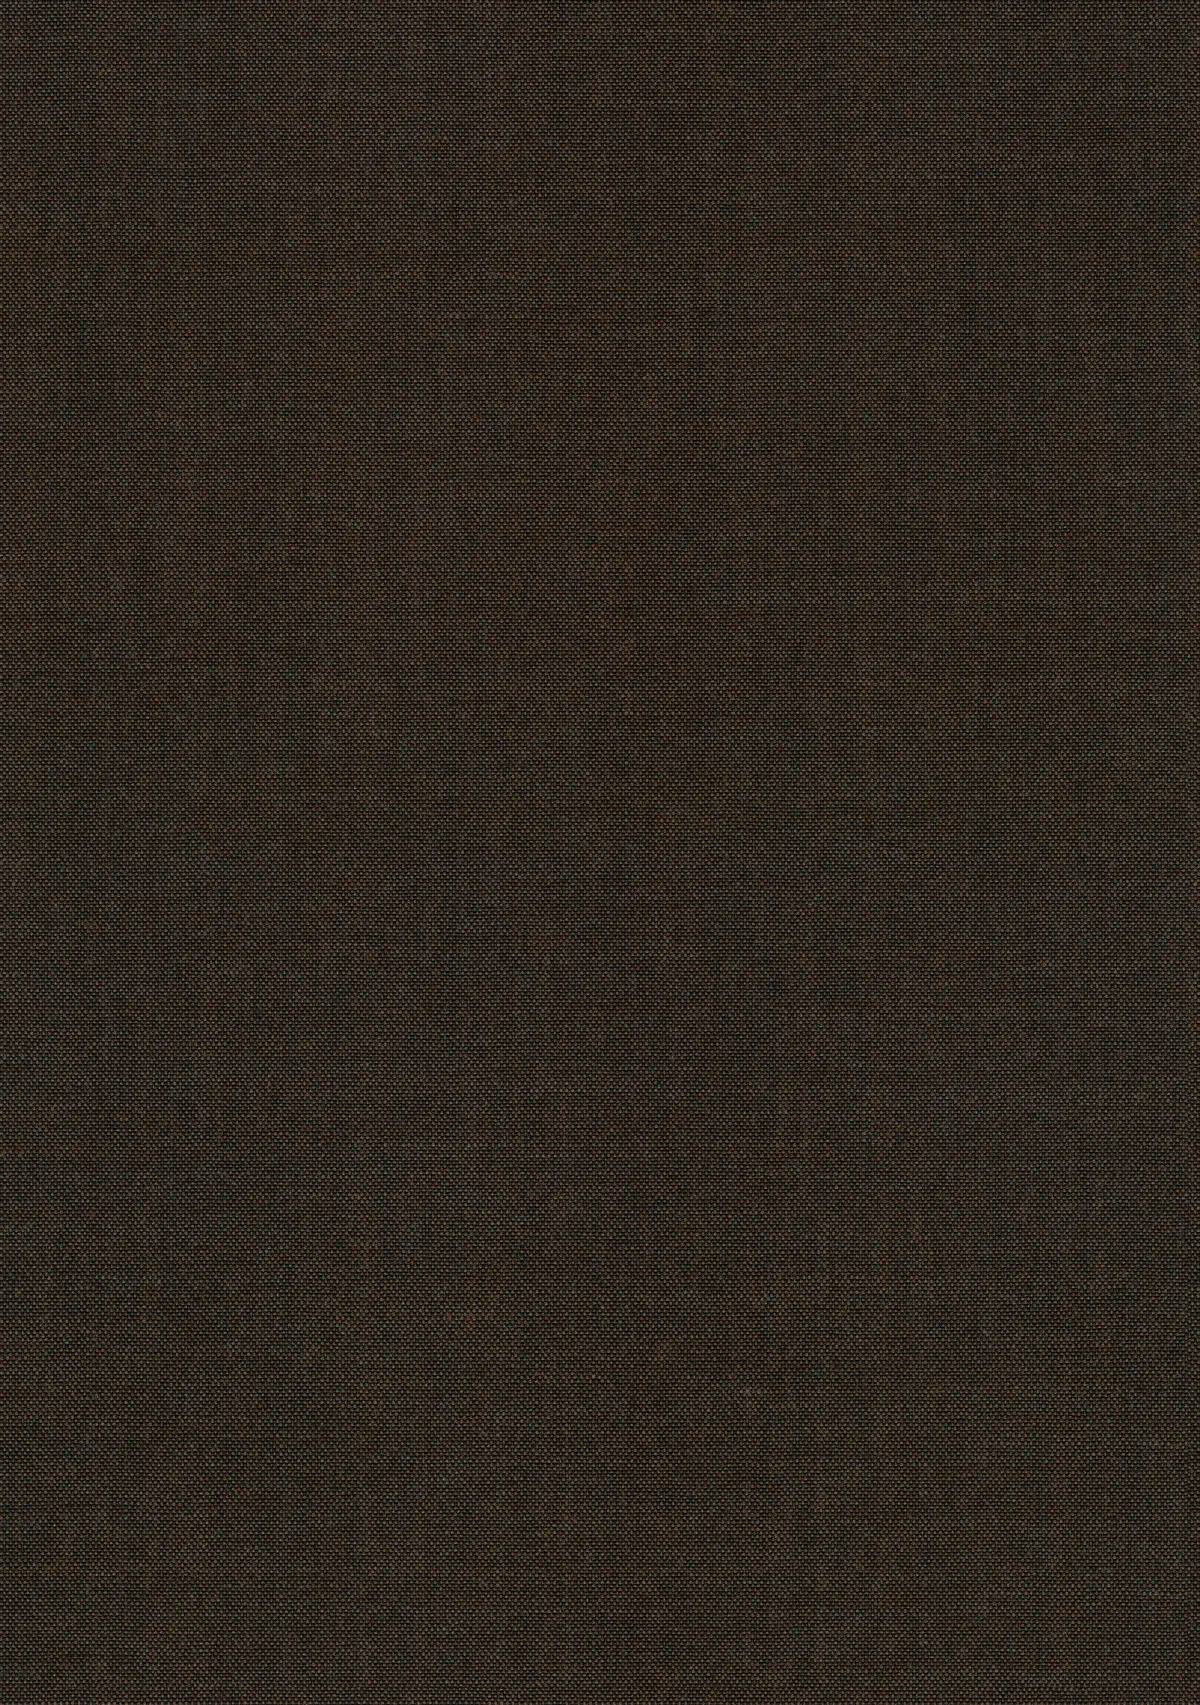 Fabric sample Remix 3 356 brown